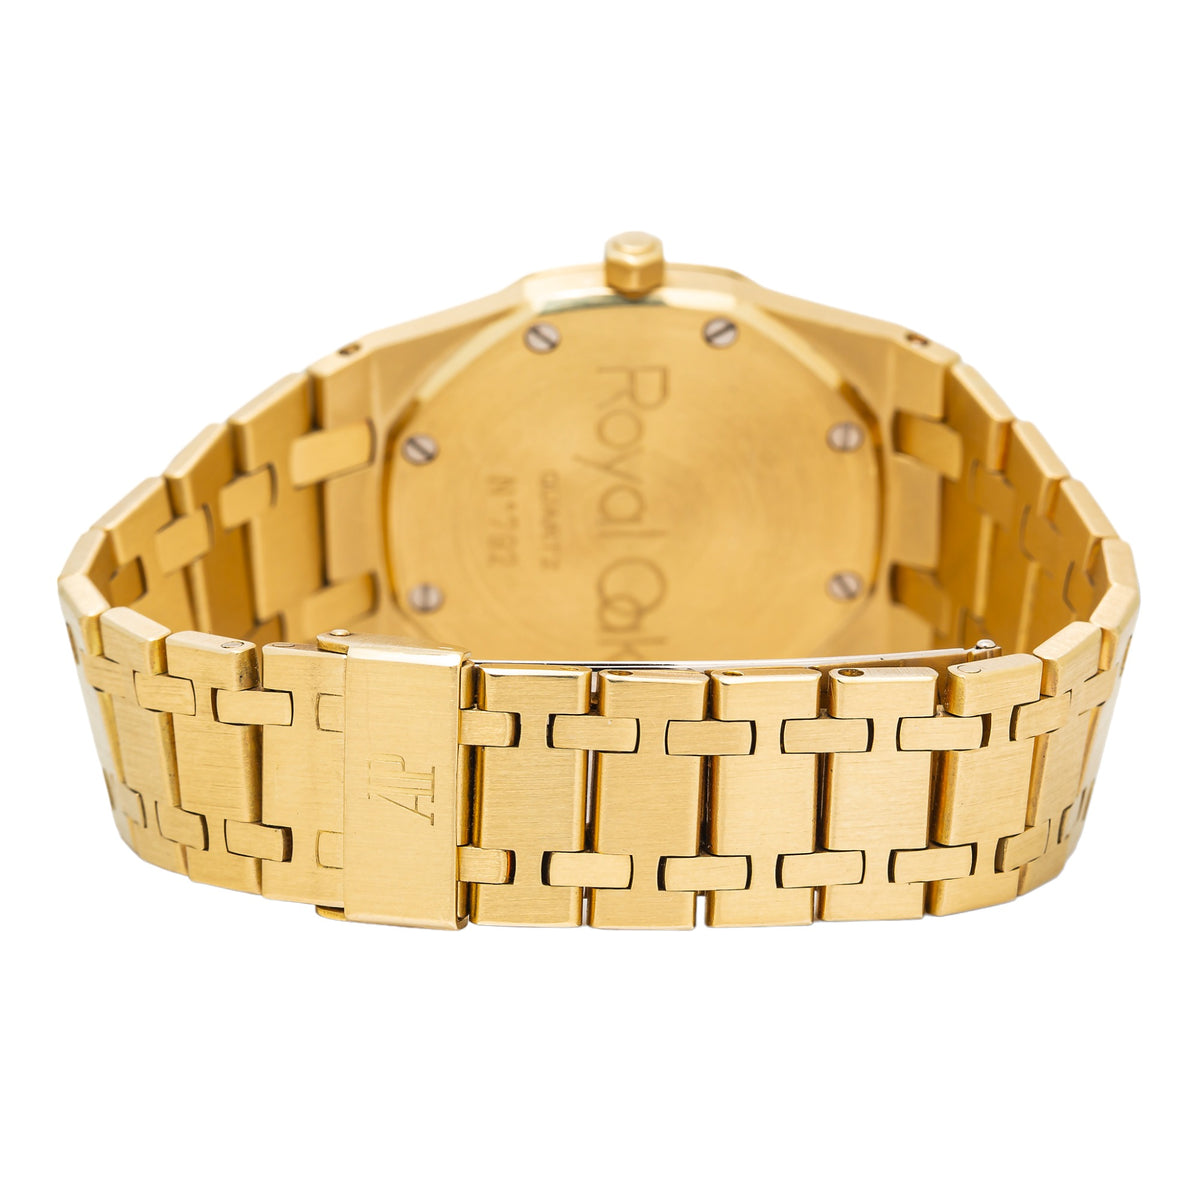 Audemars Piguet Royal Oak 56143BA 18k Yellow Gold Champagne Dial Watch 33mm